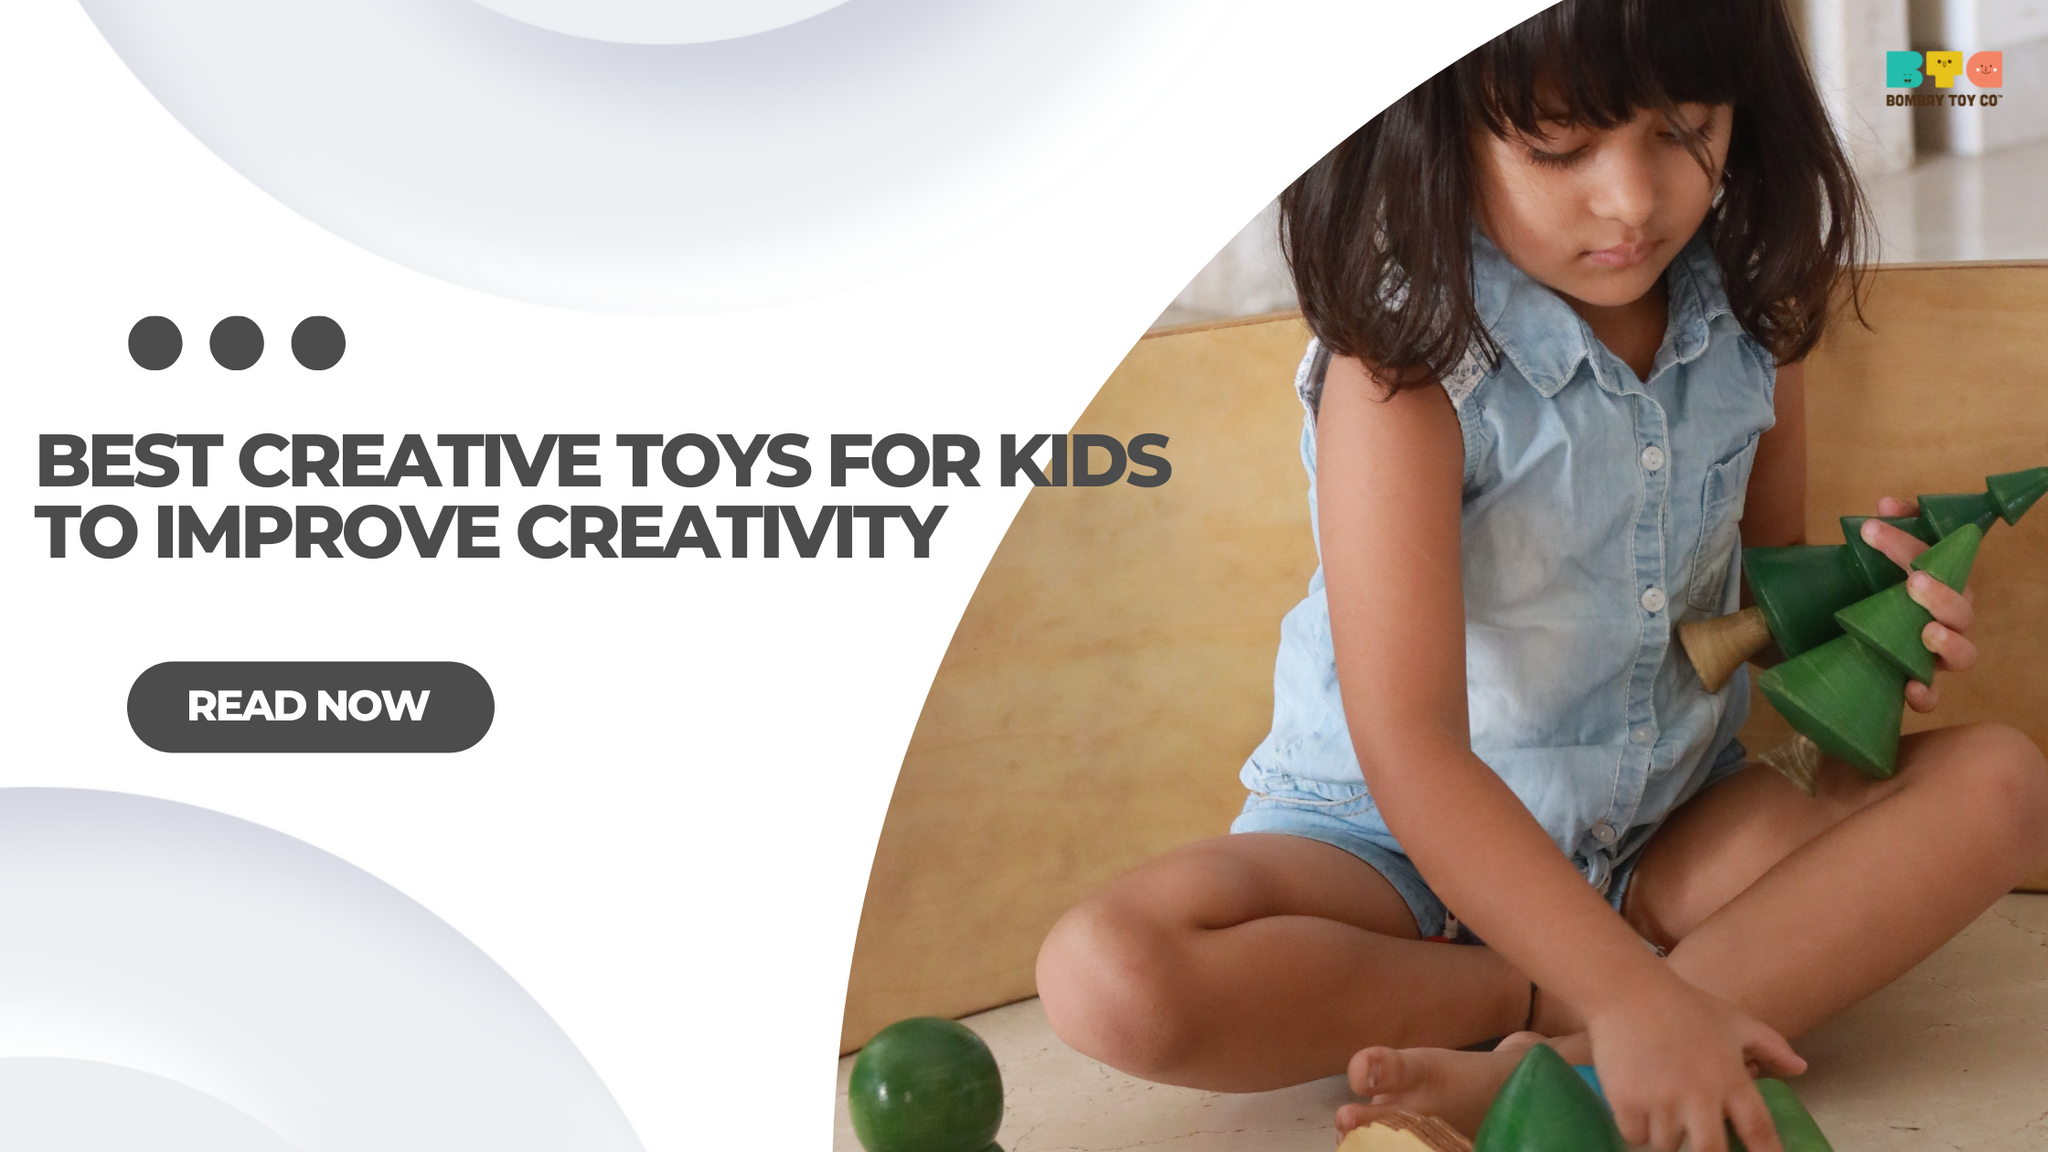 Best Toys For Kids To Improve Creativity, According To Alumnus from IIT Delhi and IIM Calcutta